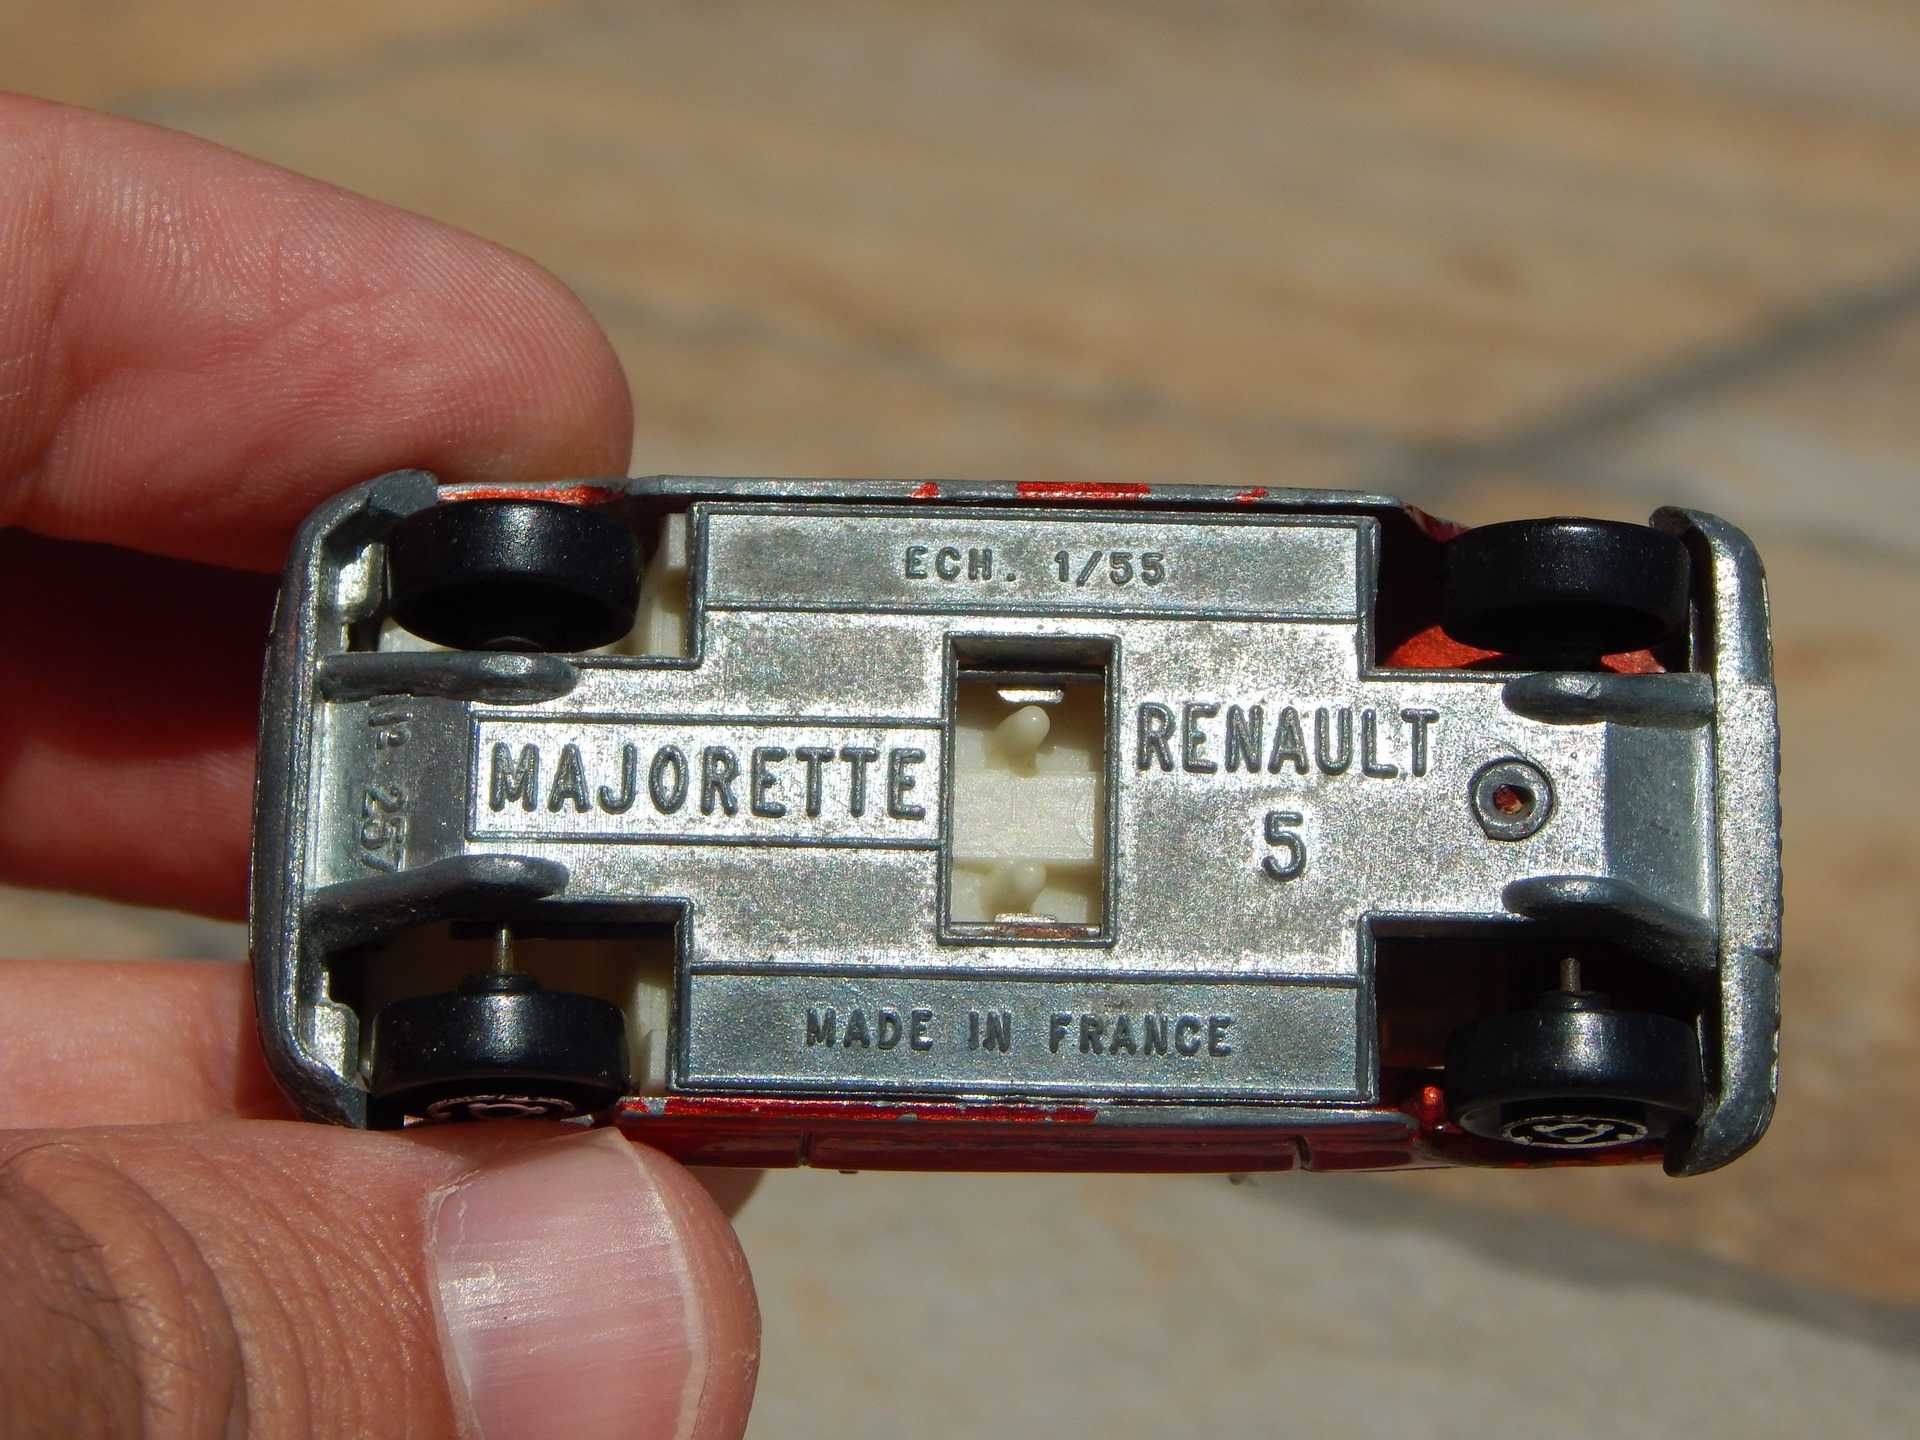 Macheta veche Renault 5 Majorette scara 1:55 fabricata Franta